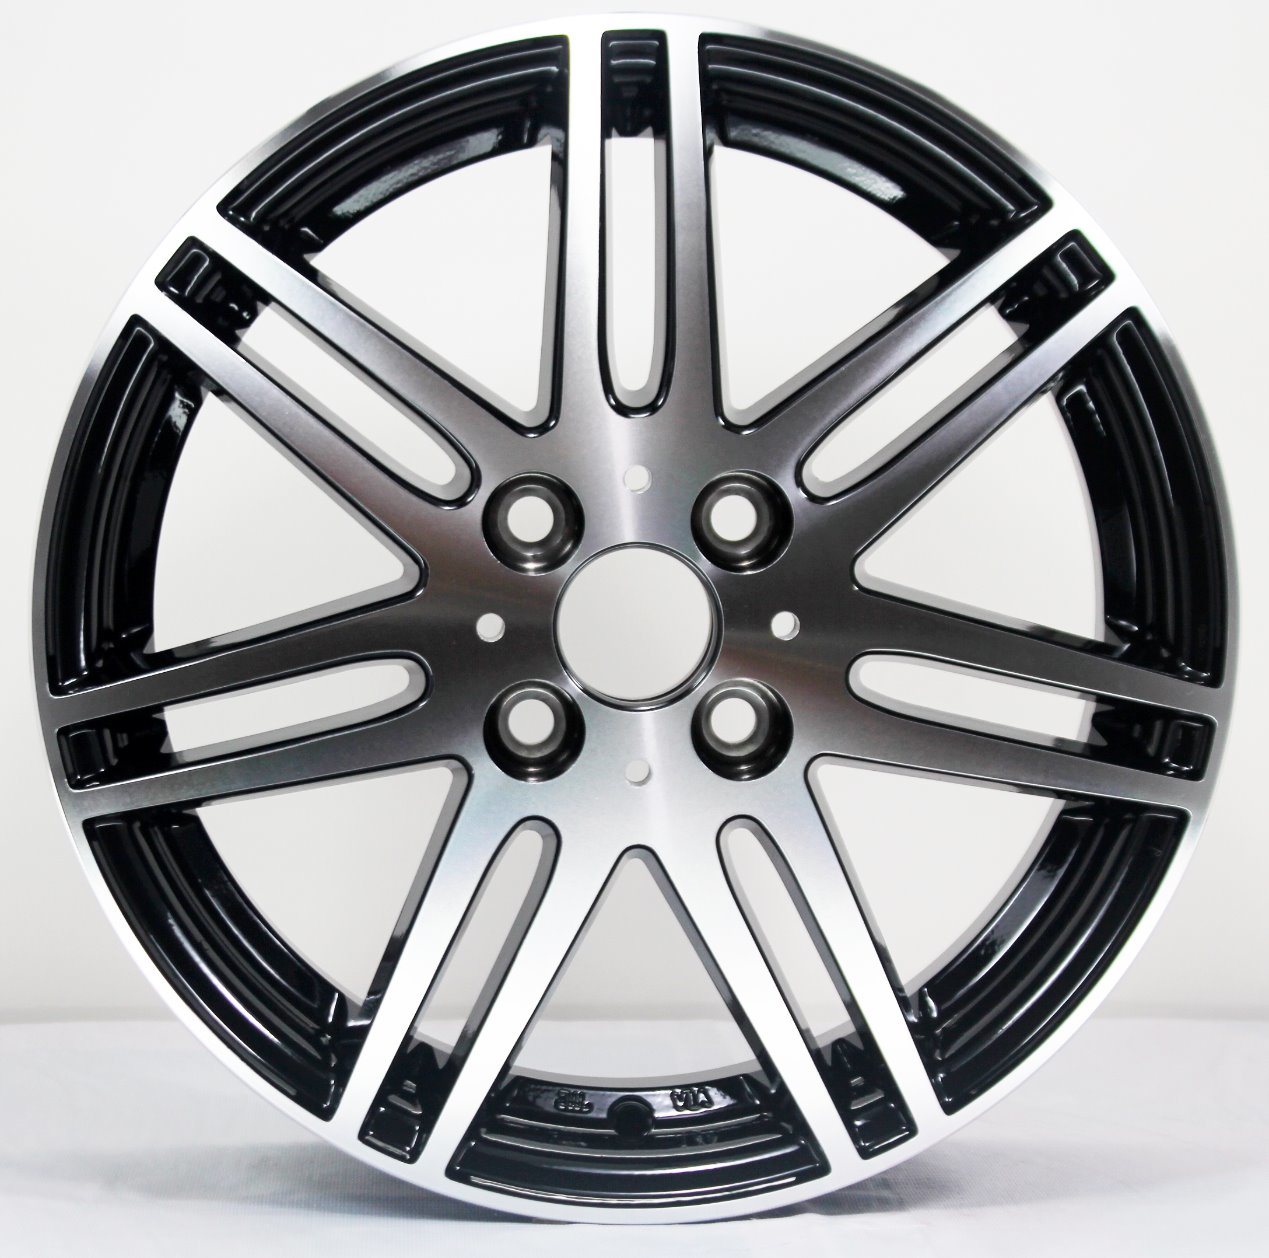 15 Diameter Hot Sale High Quality Car Aluminum Wheel Rims for Toyota